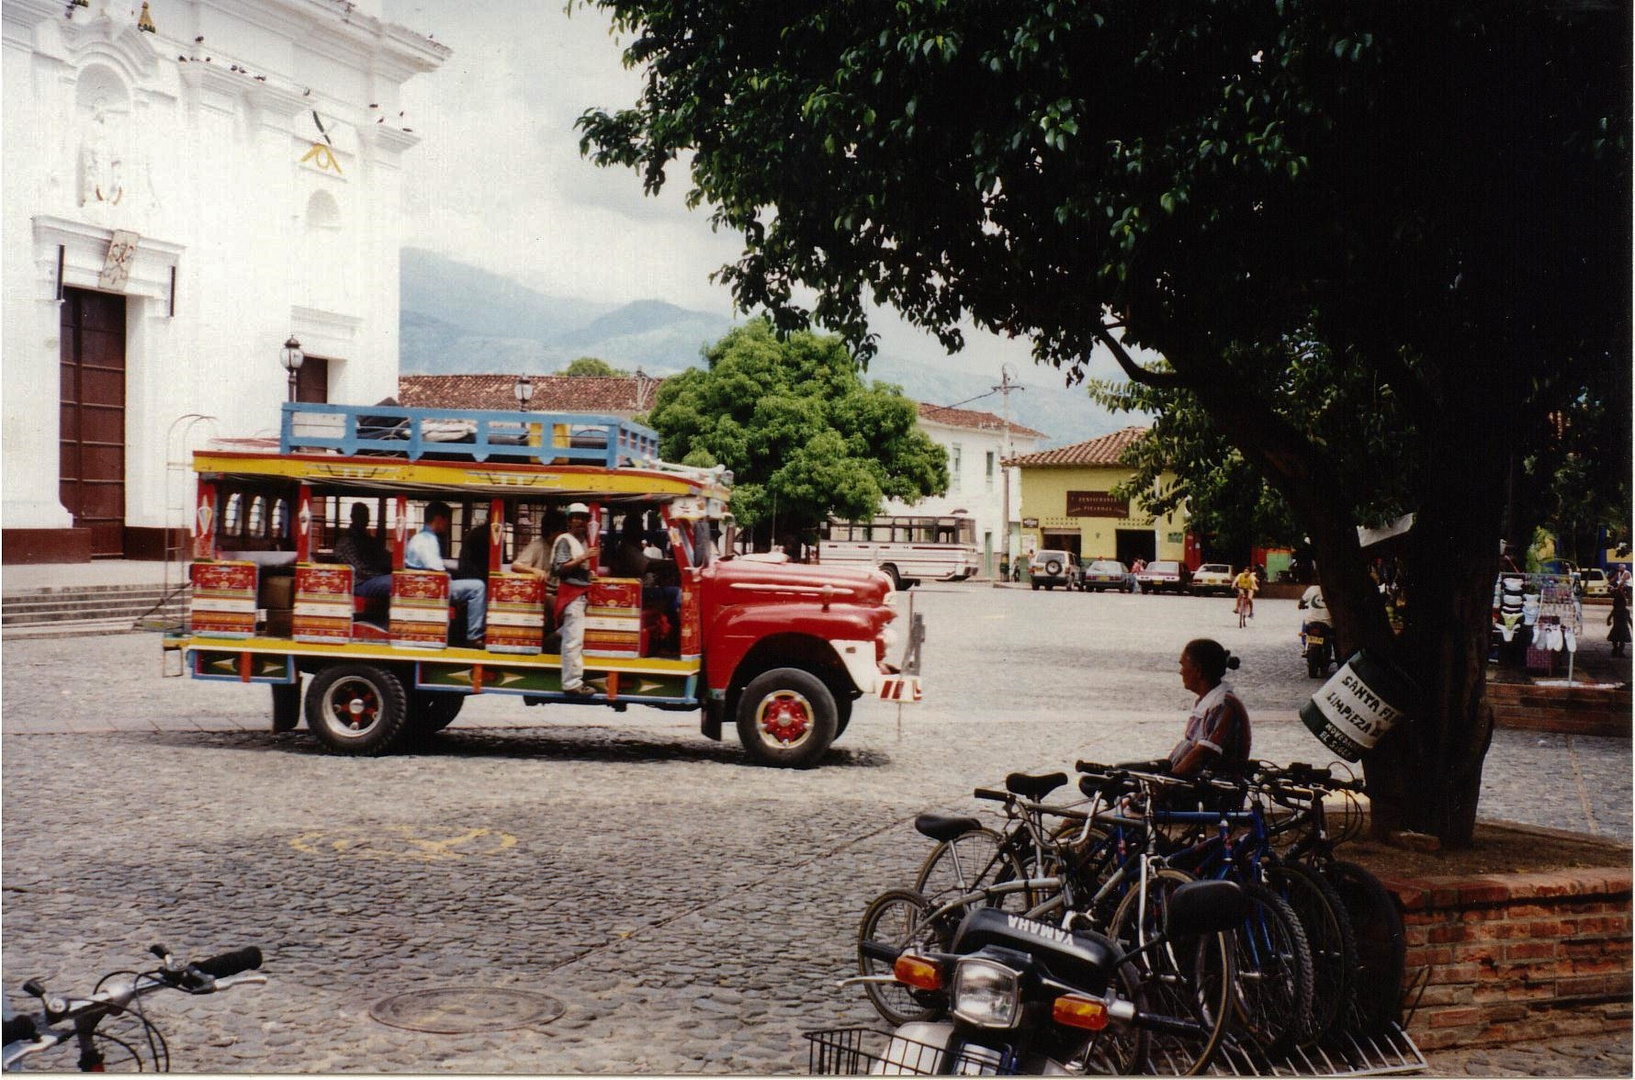 Public transportation Santa Fe de Antioquia